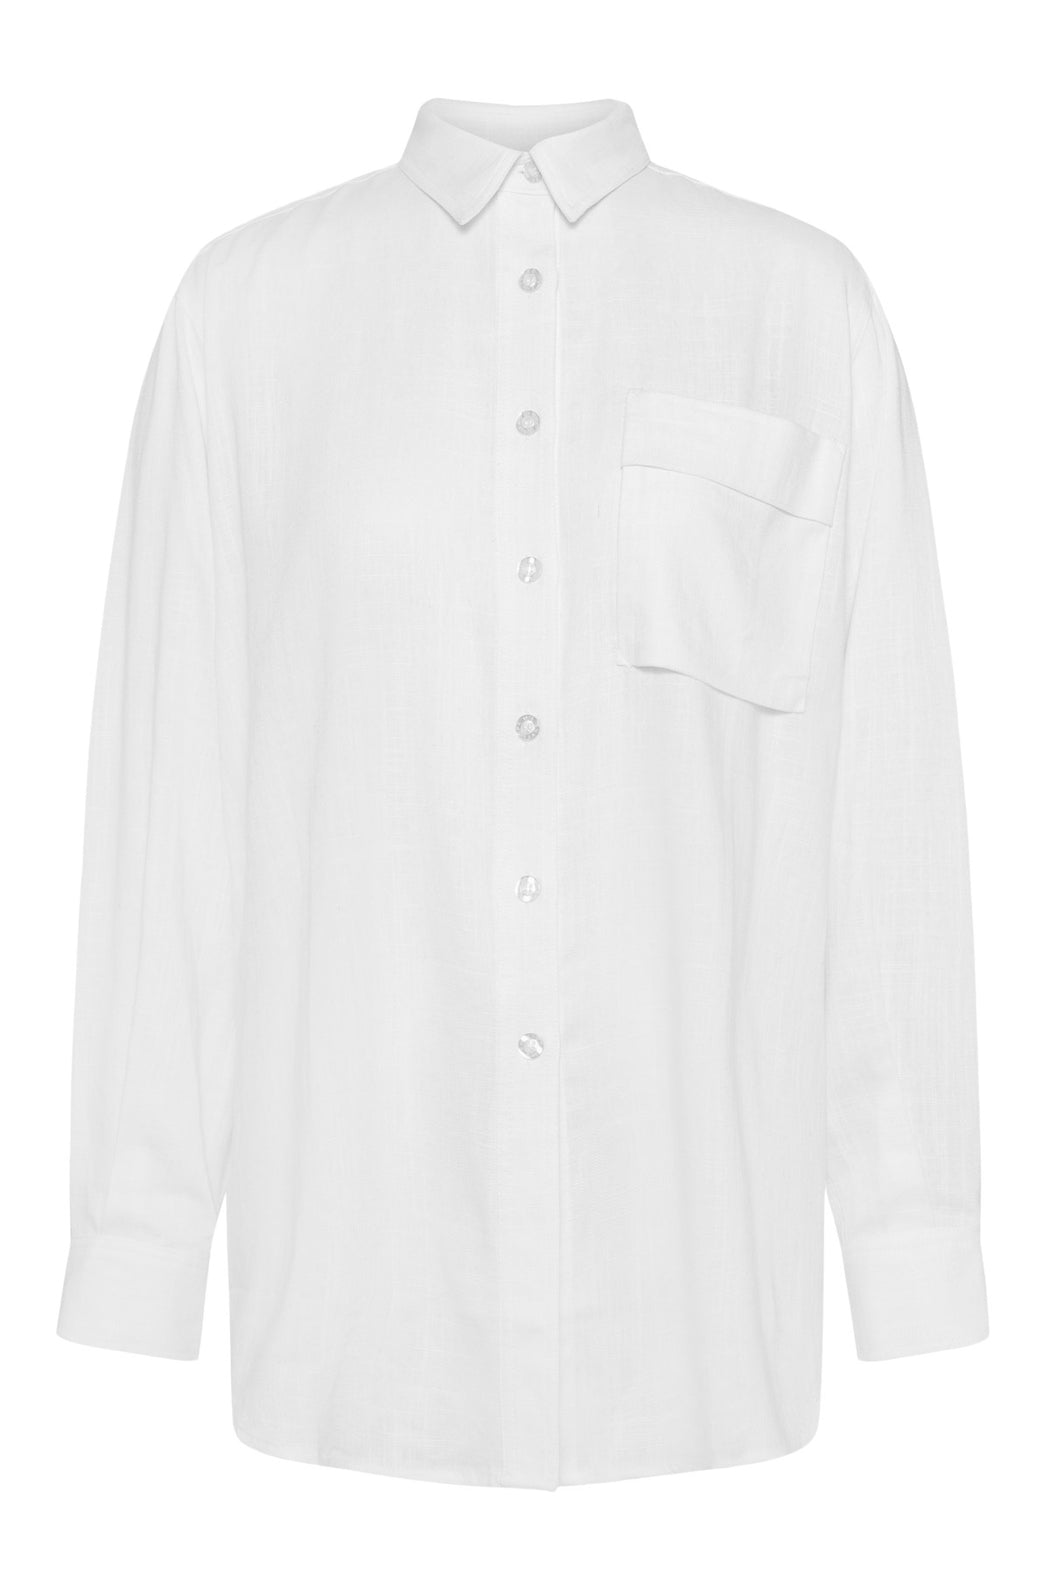 Envelope1976 Pura shirt - Viscose & Linen Shirt White